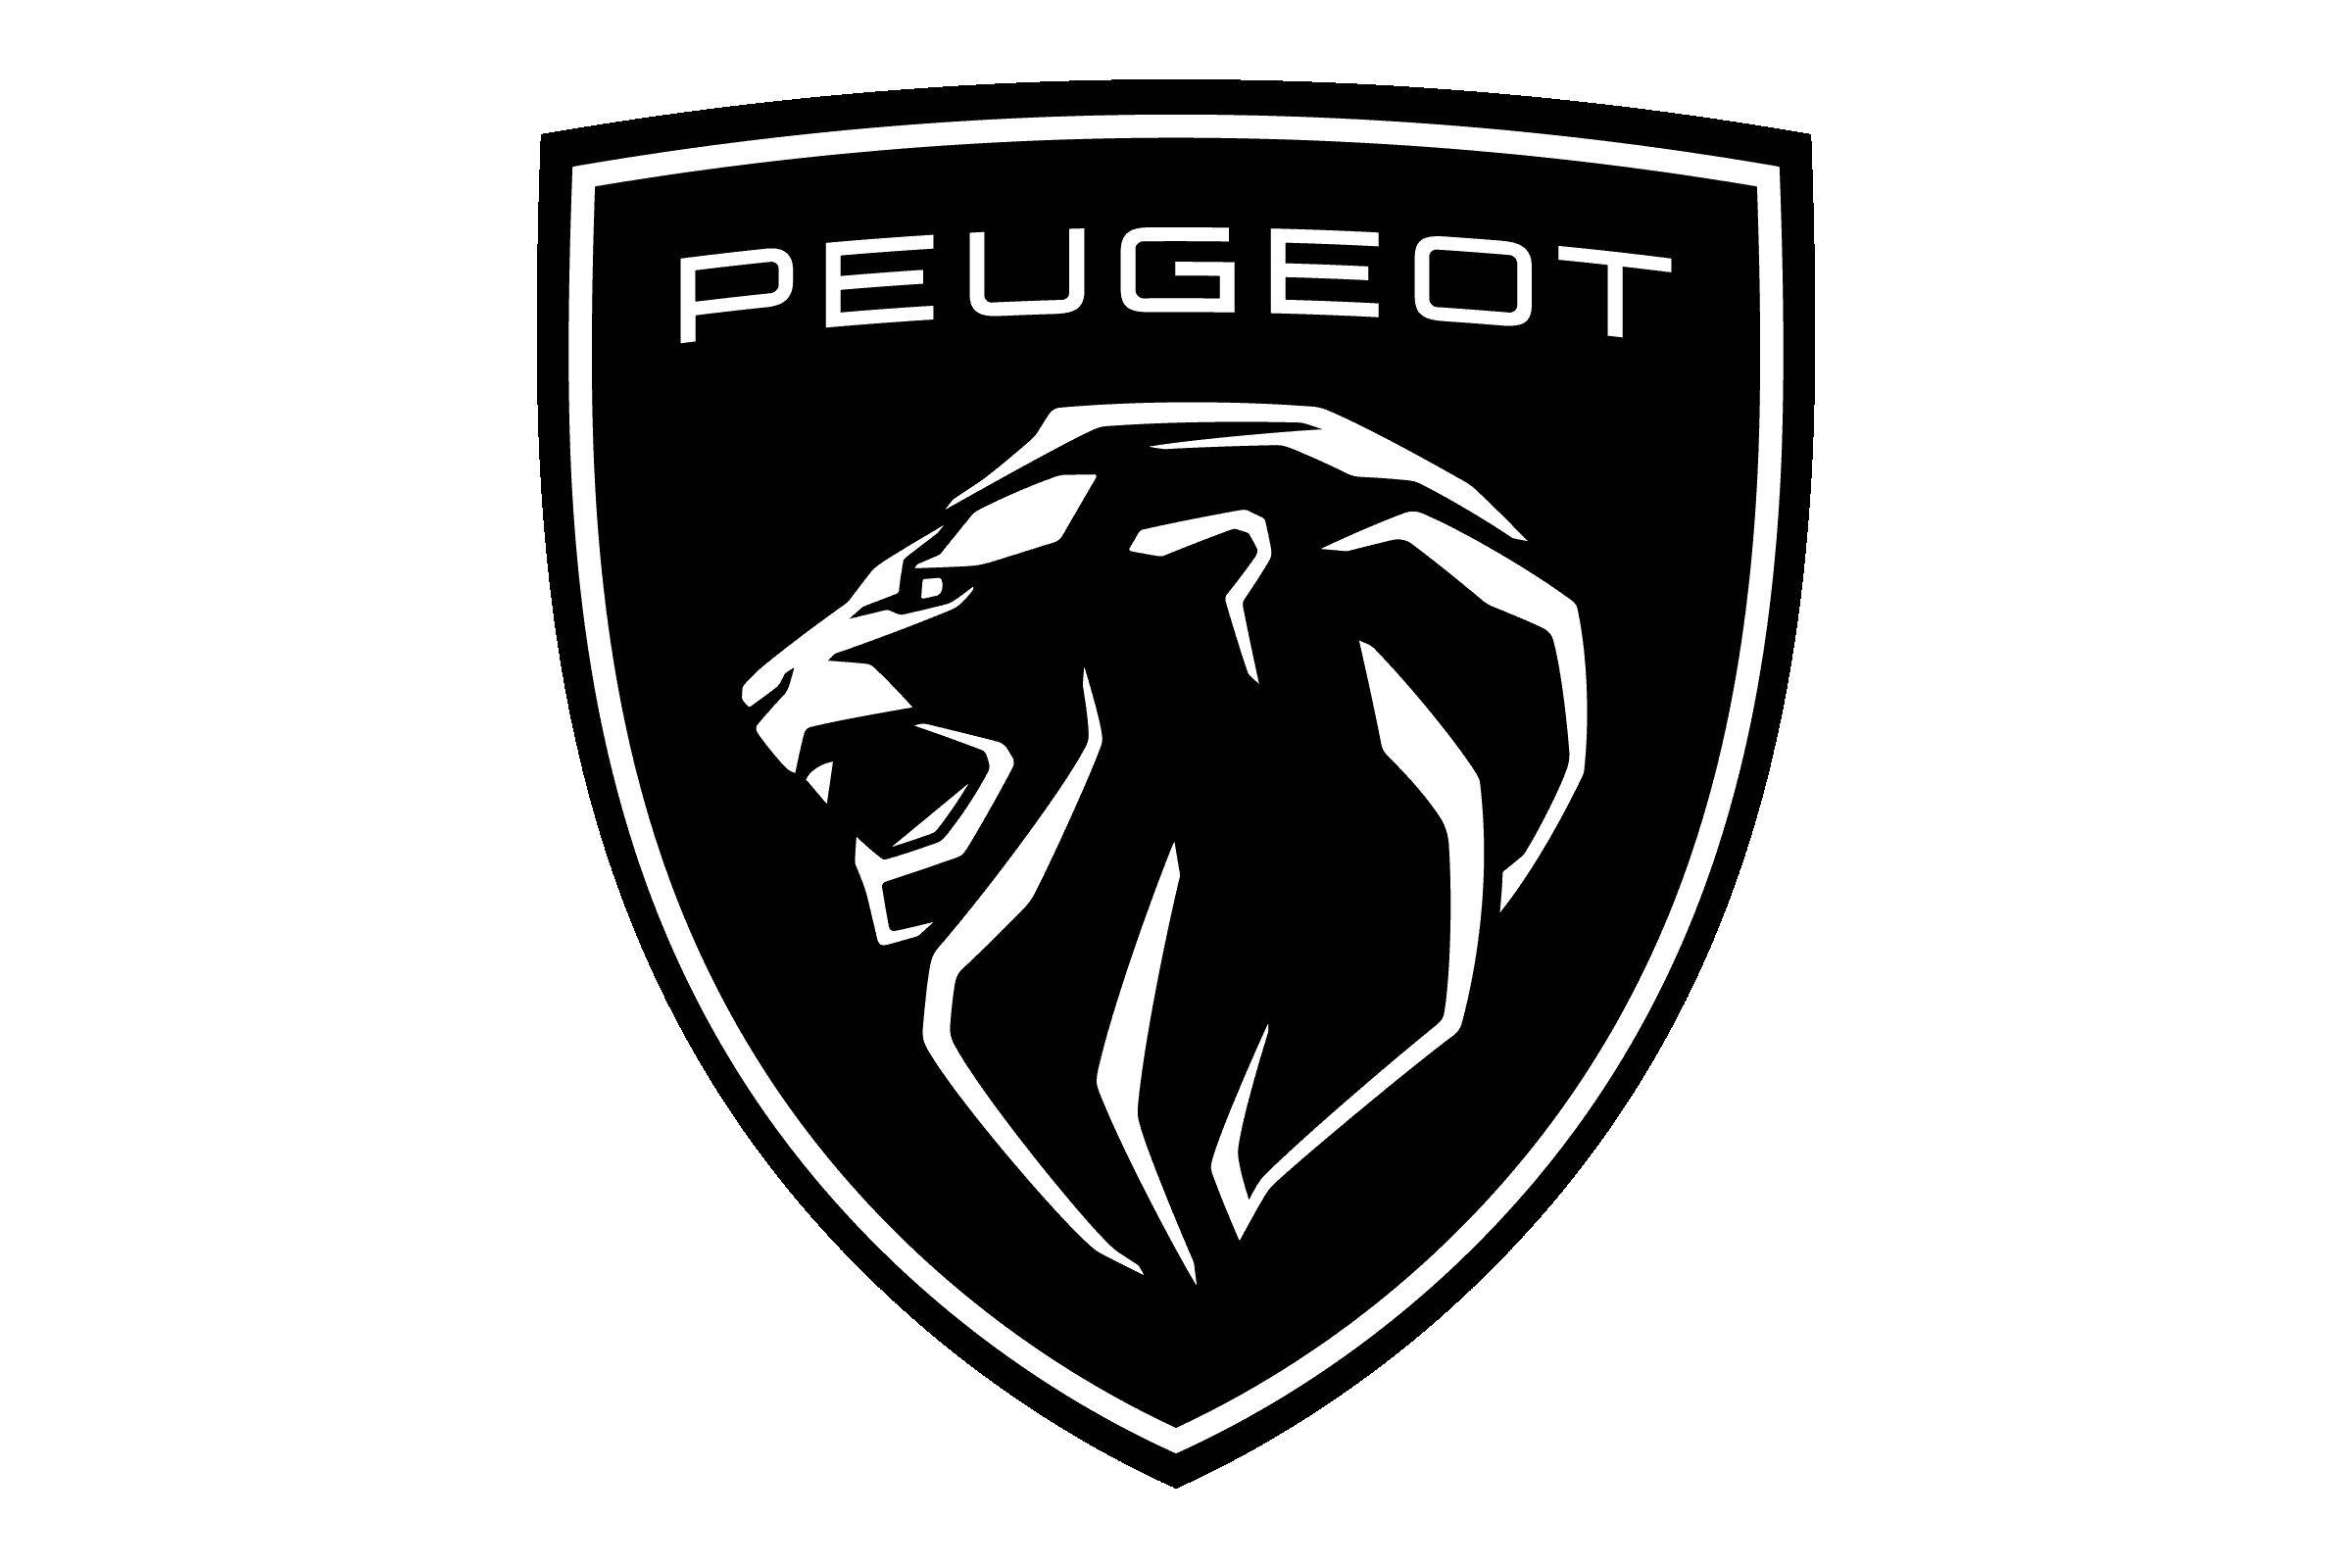 peugeot logo - Поиск в Google  Car logos, Car brands logos, Peugeot